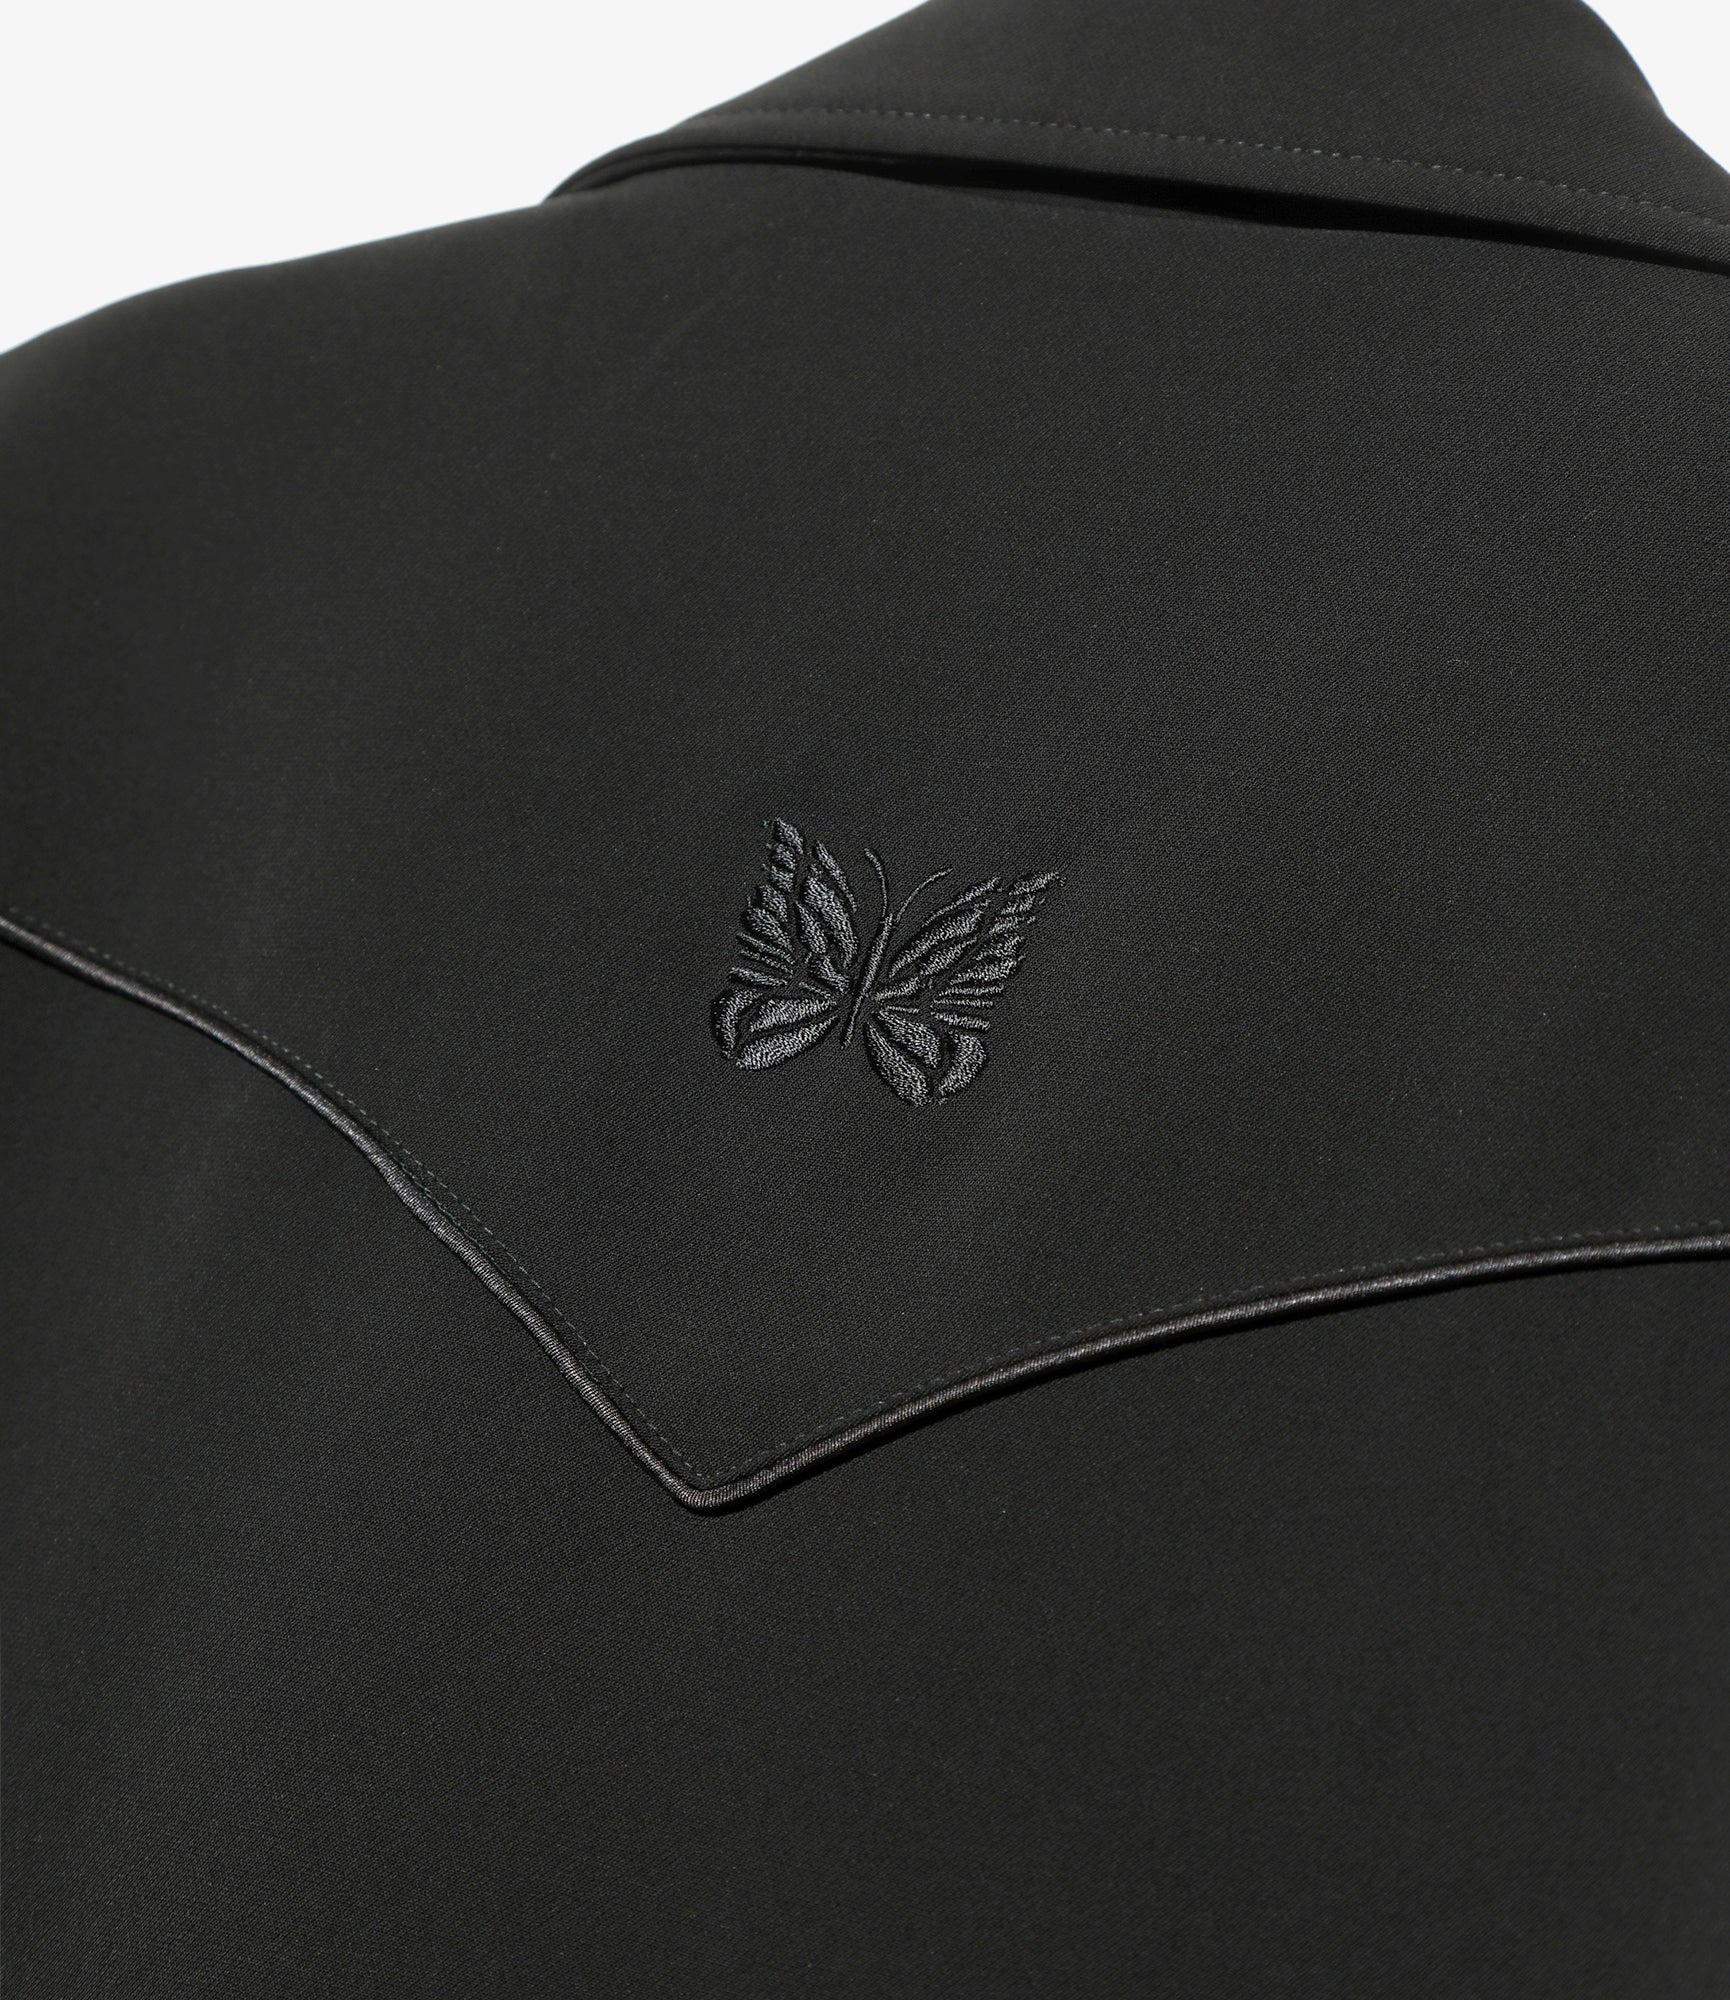 Western Leisure Jacket - Black - PE/PU Double Cloth